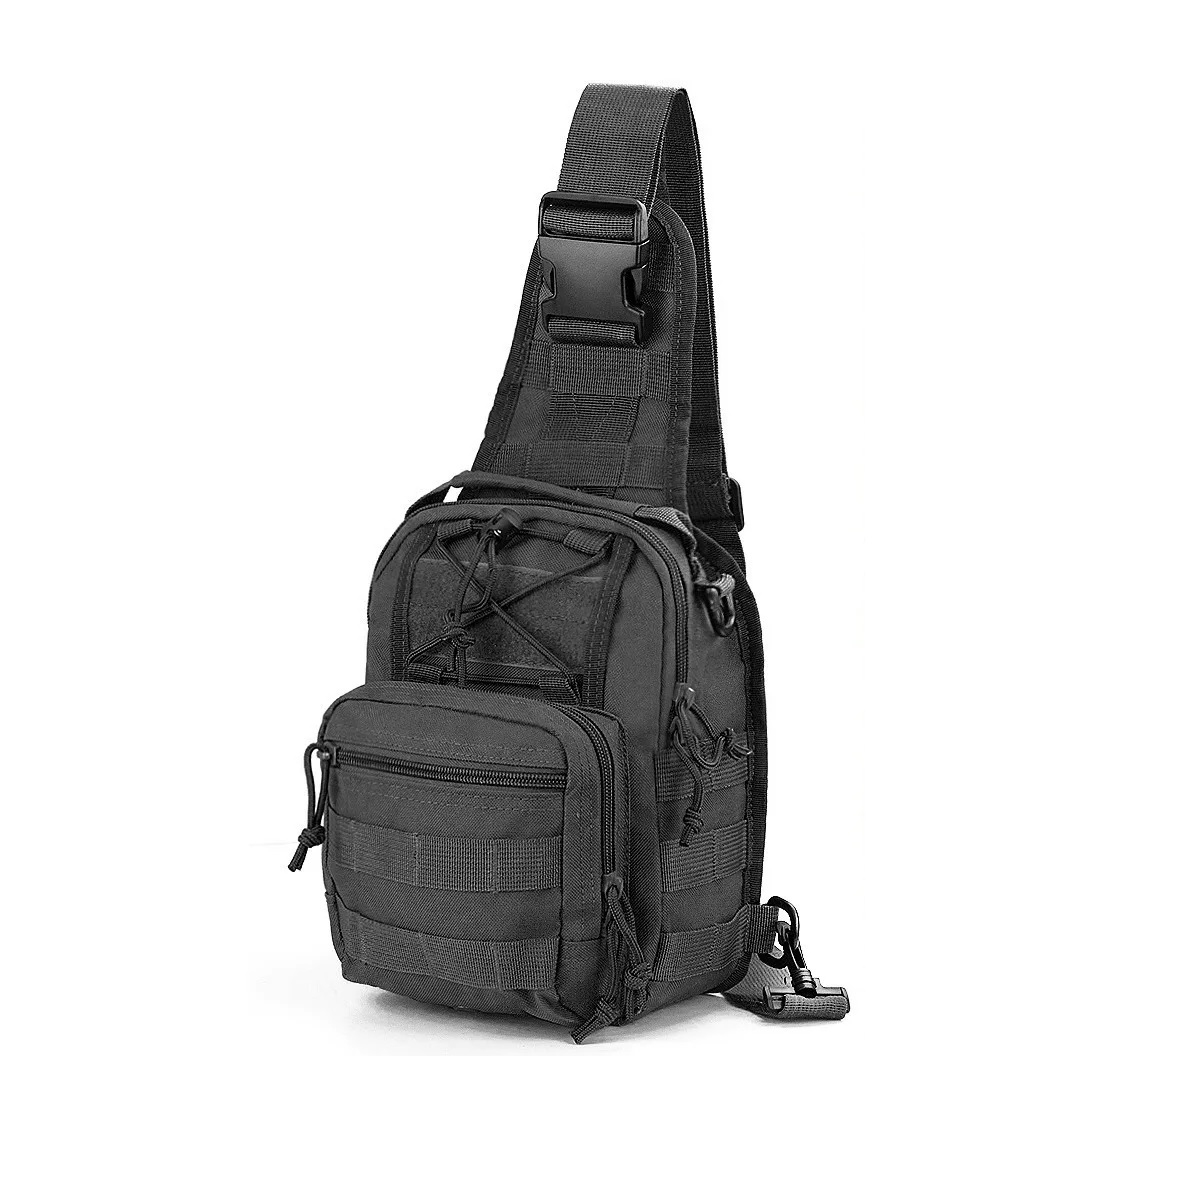 Backpack Fila Unisex F23l1101749 Textil Negro